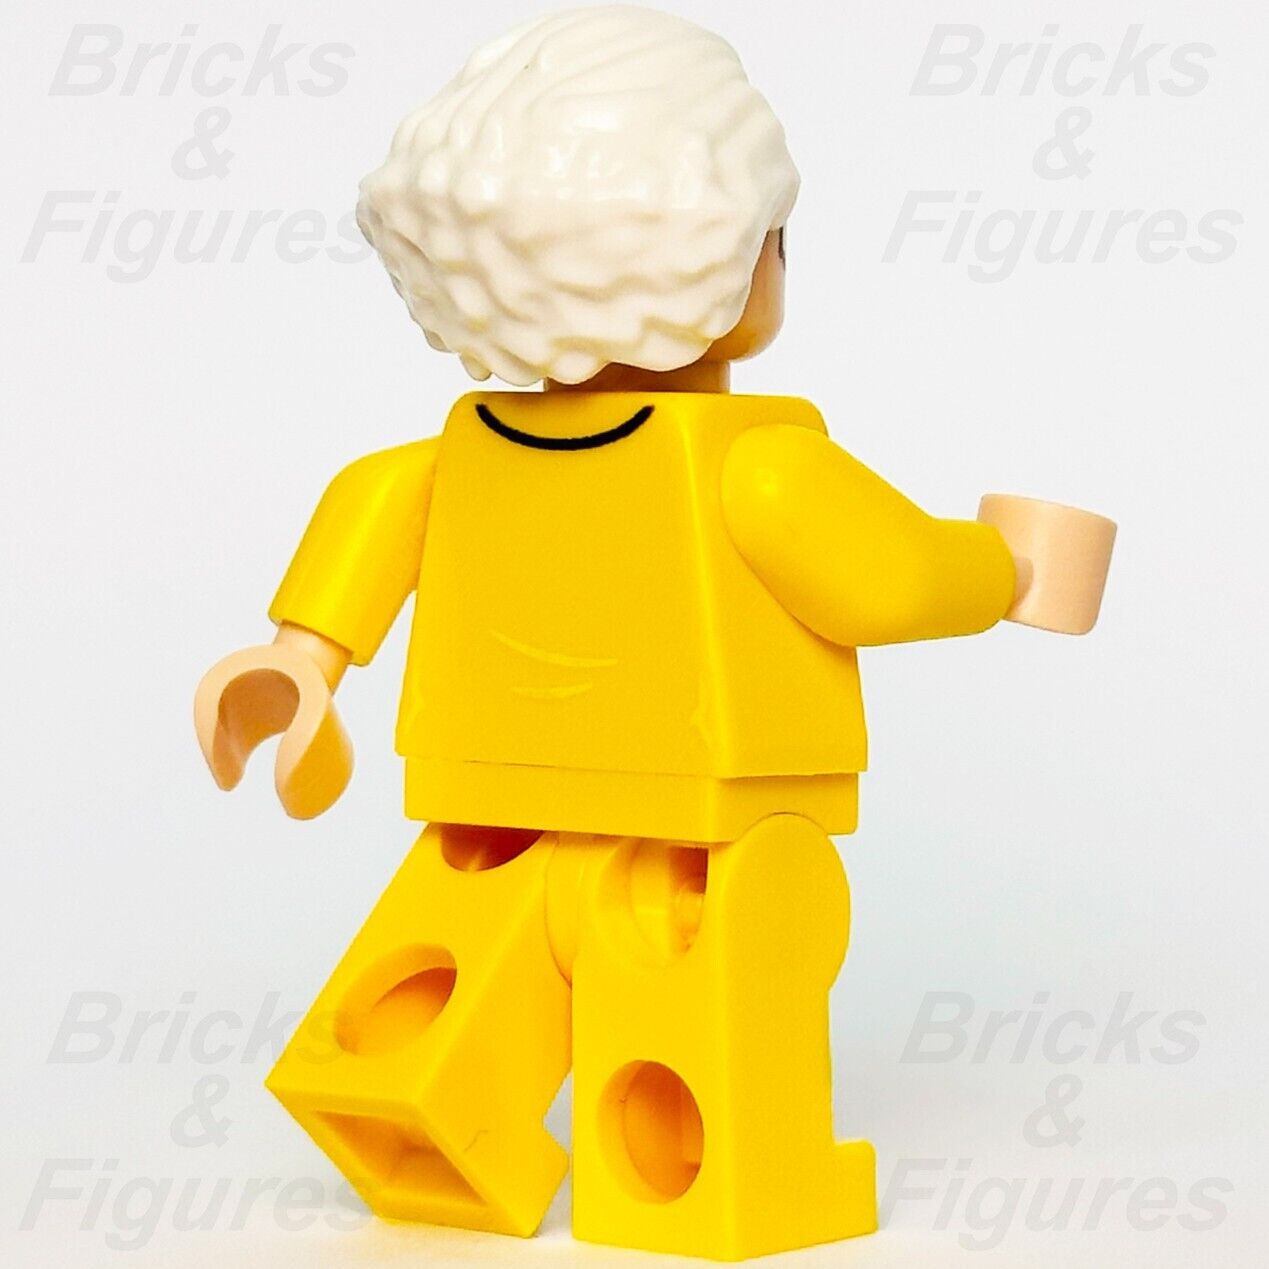 LEGO Doc Brown Minifigure Back to the Future Creator Expert 10300 btf002 New - Bricks & Figures